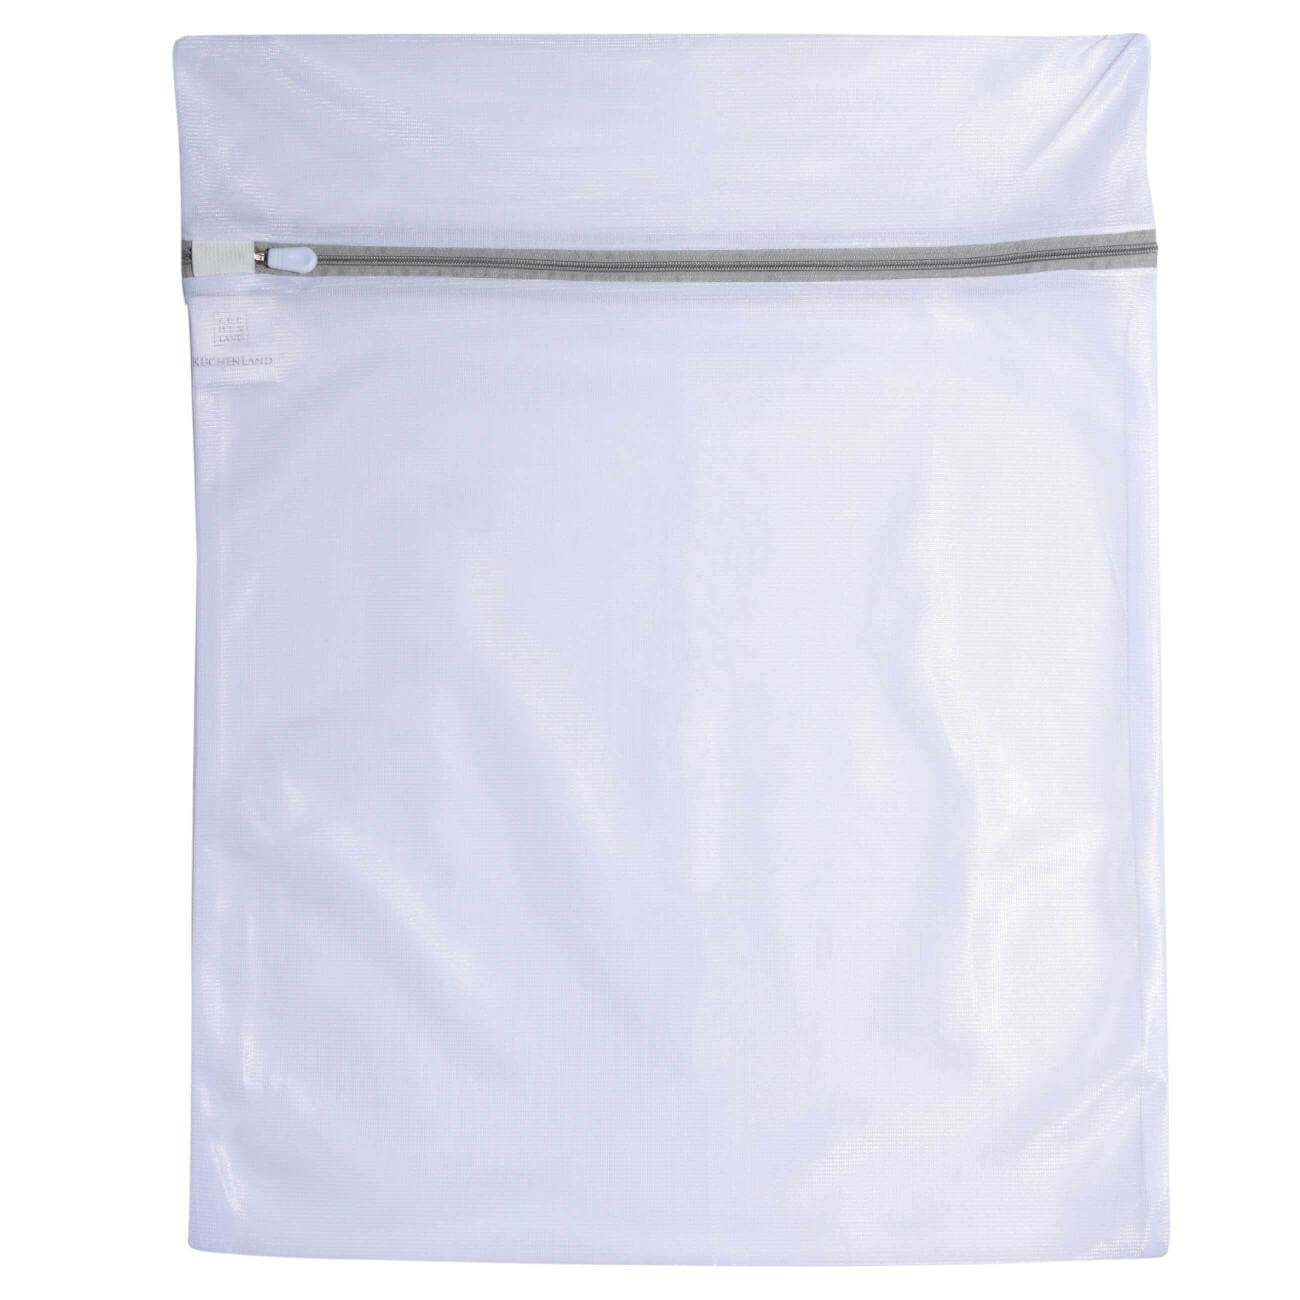 Laundry bag, 40x50 cm, polyester, white-gray, Safety plus изображение № 1